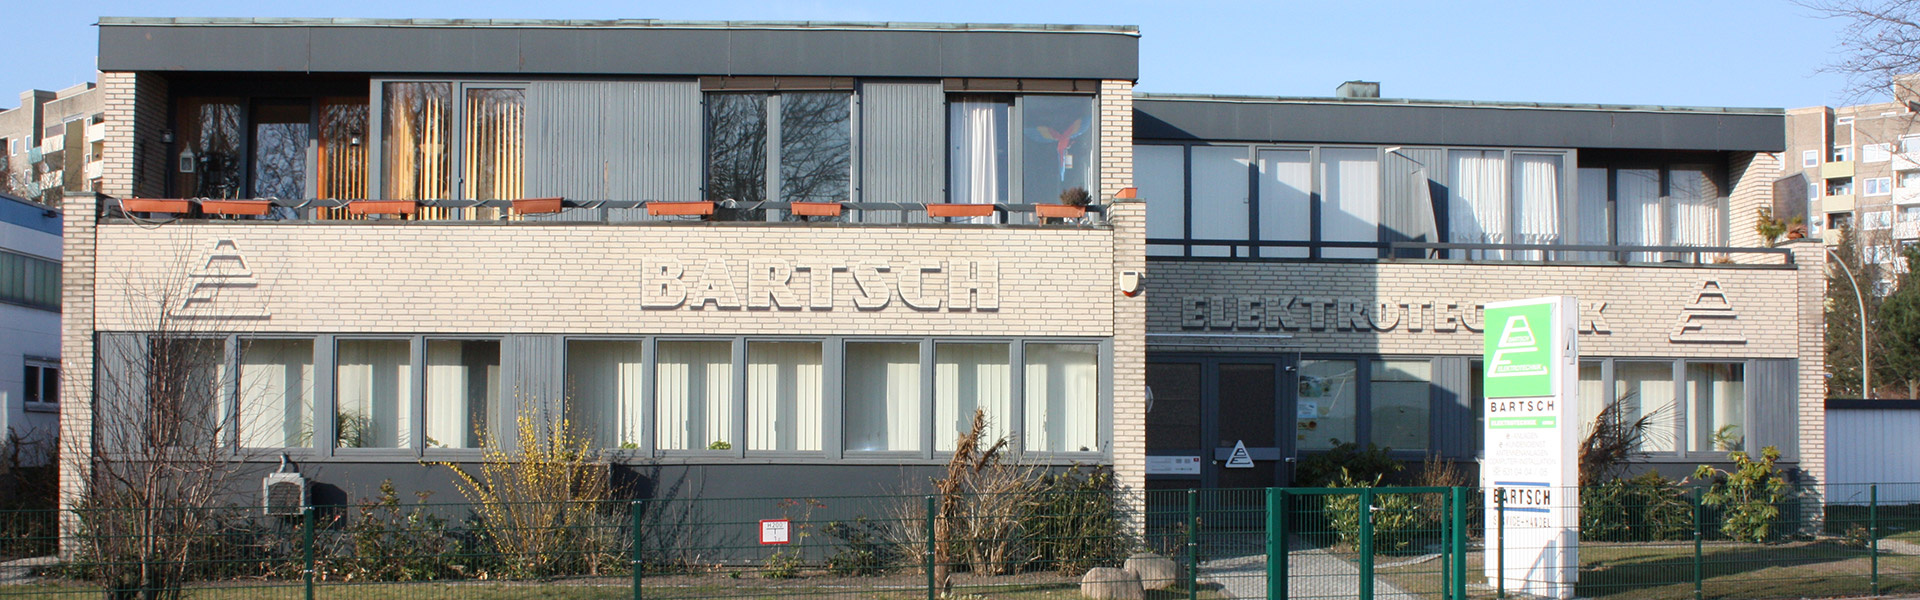 Bartsch Elektrotechnik GmbH in Hamburg